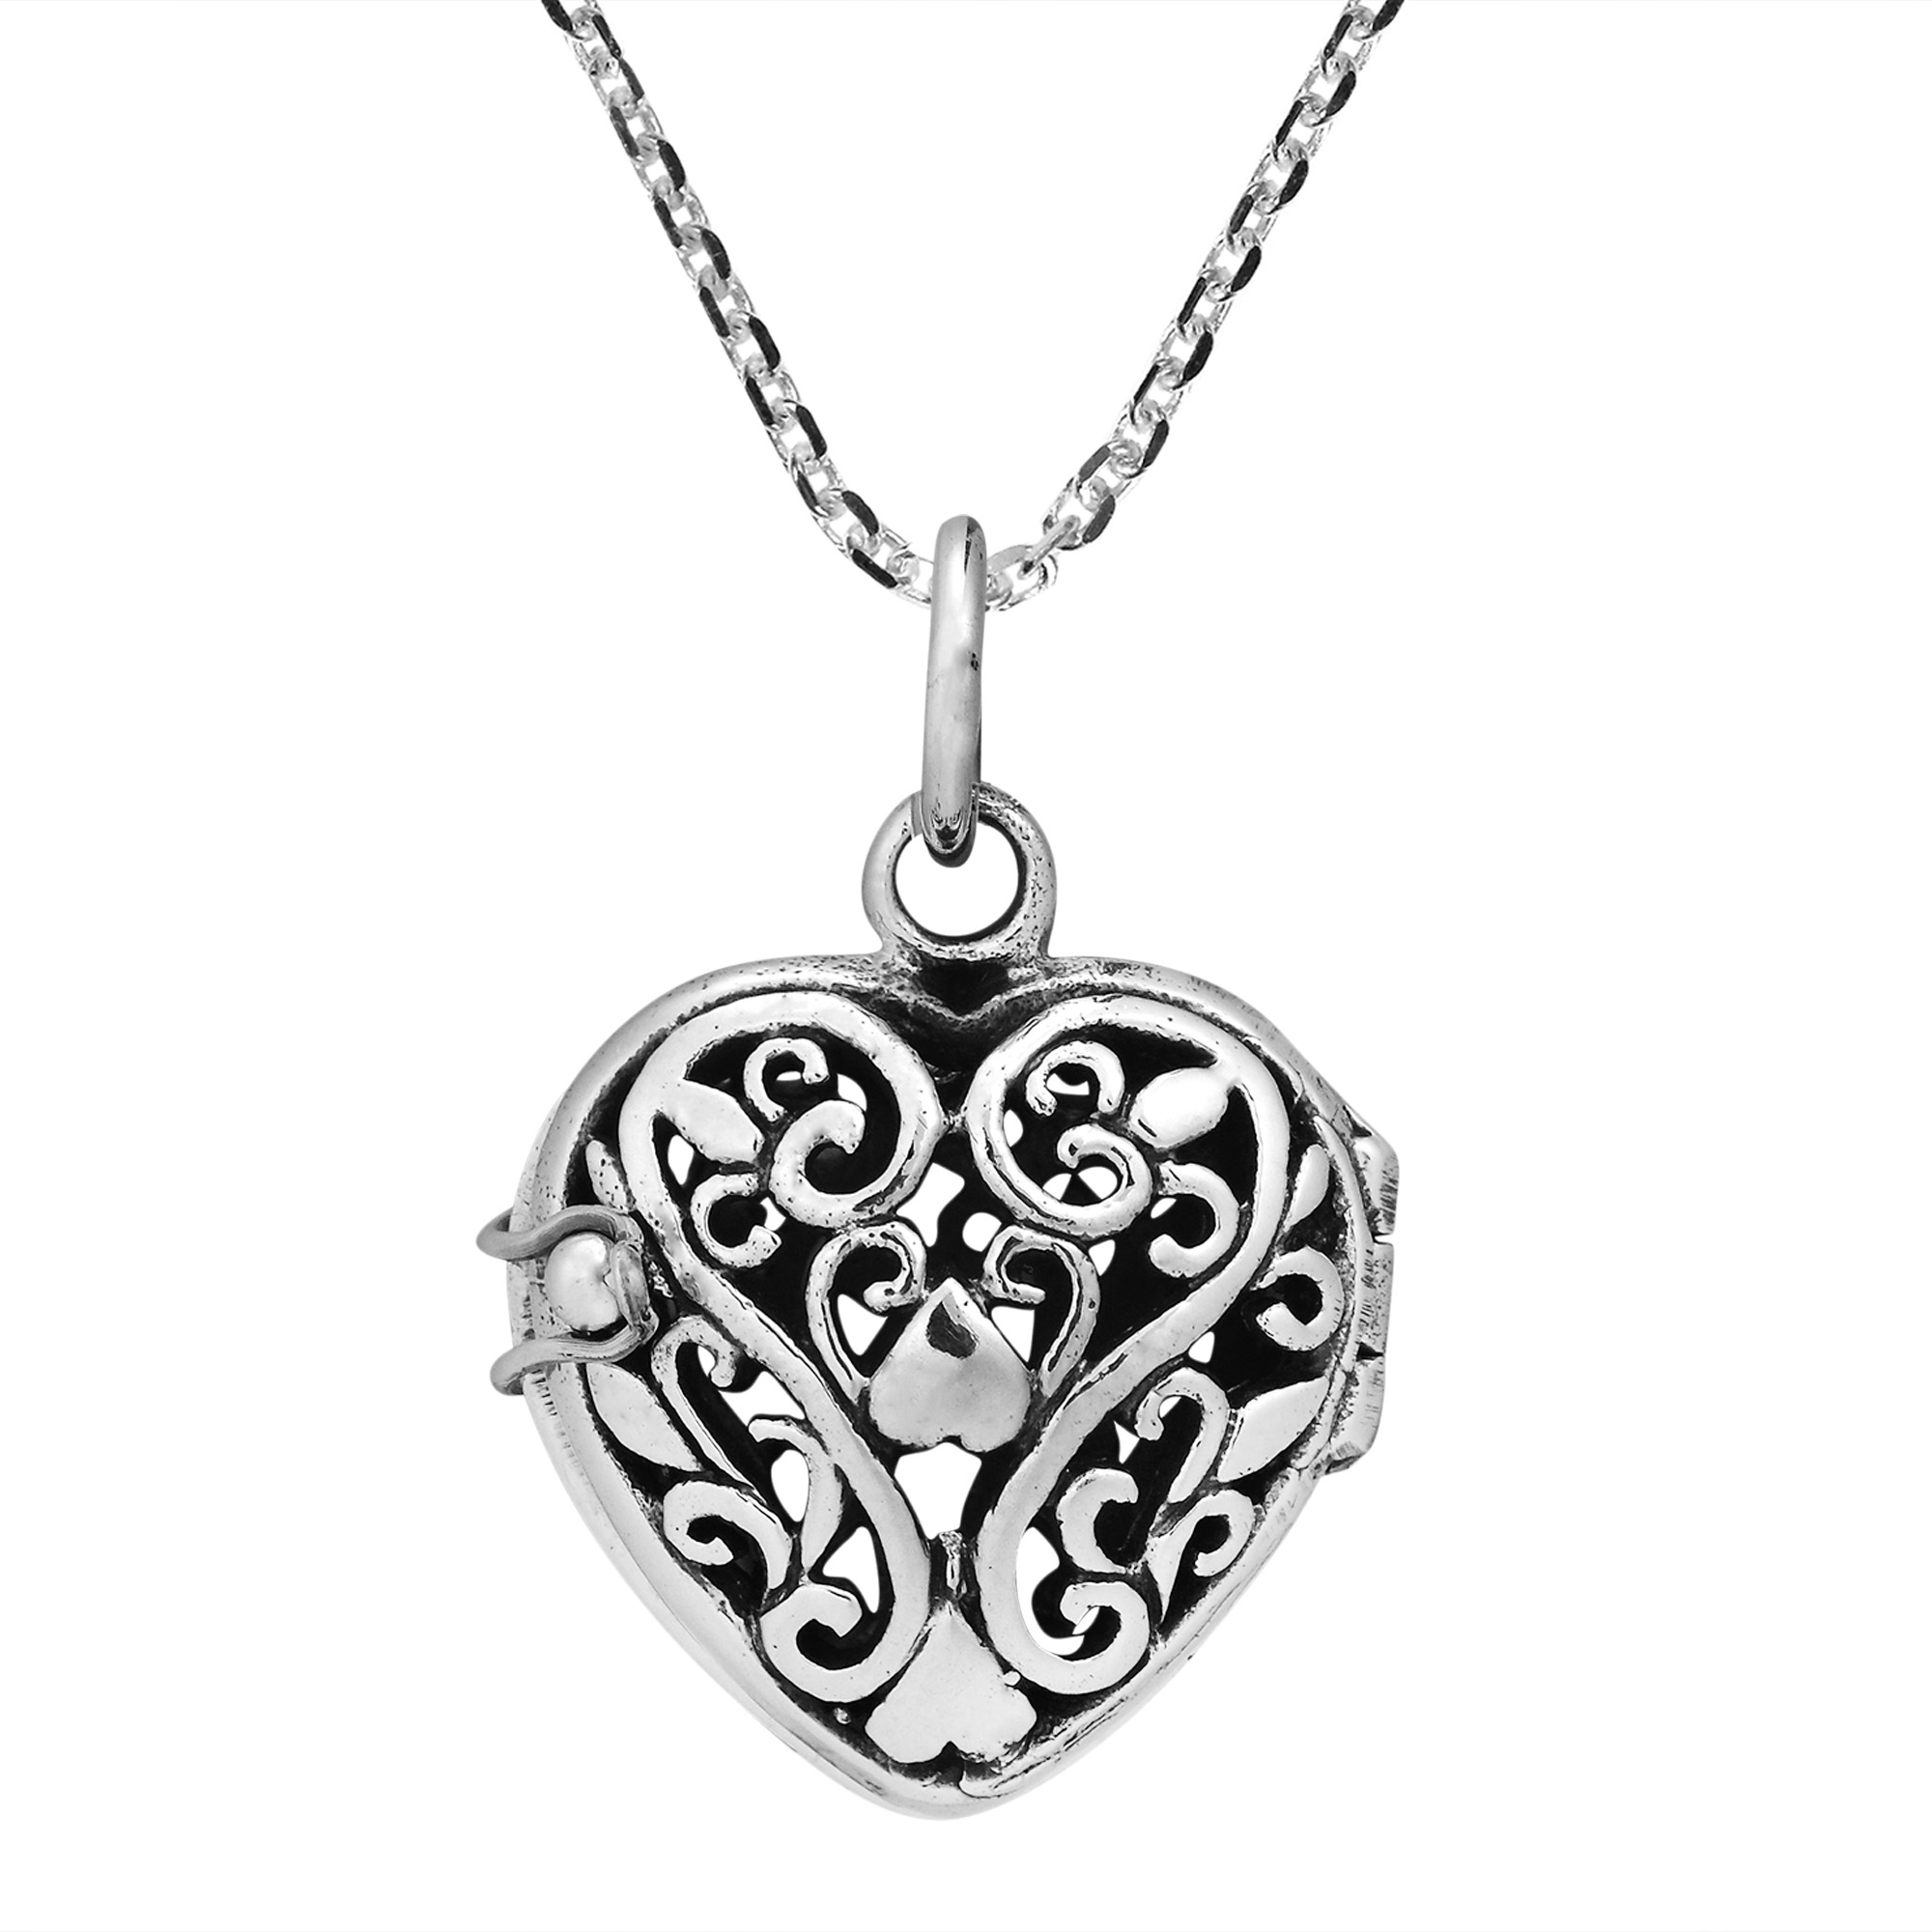 Romantic Filigree Heart Locket Sterling Silver Necklace